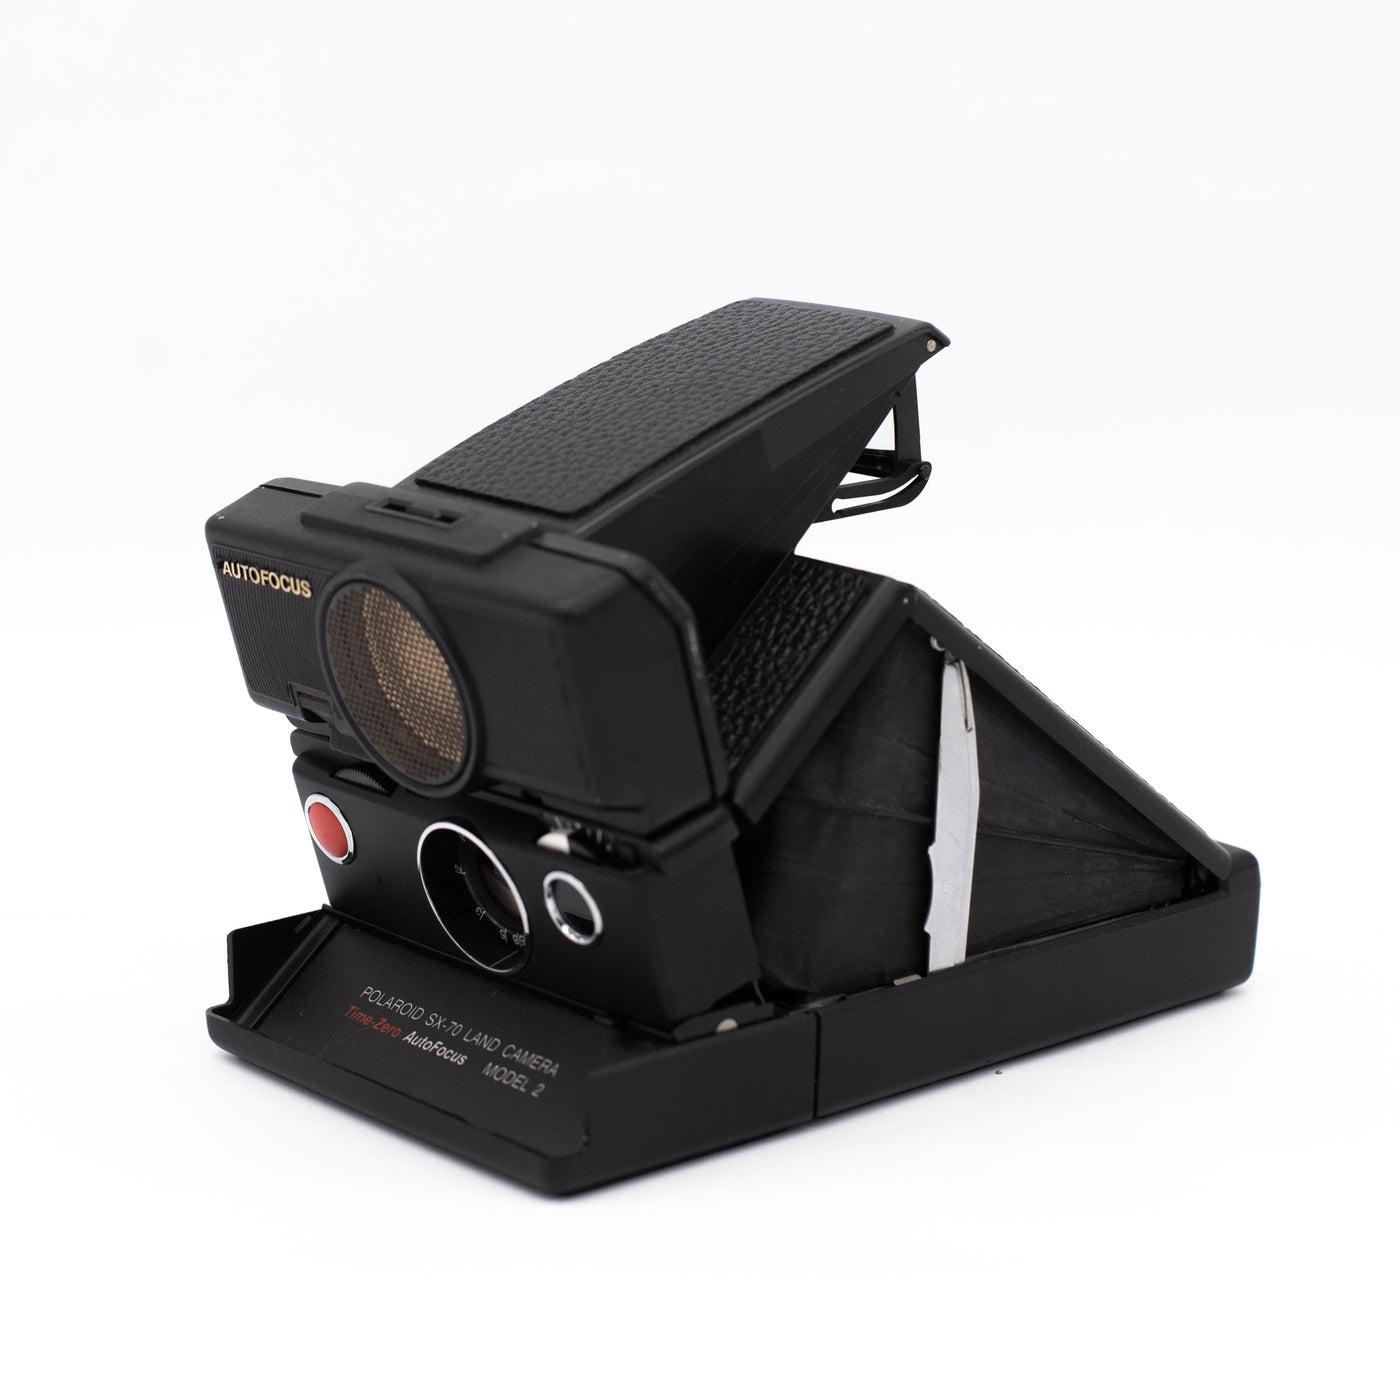 Polaroid SX-70 Instant Camera - Folding Land